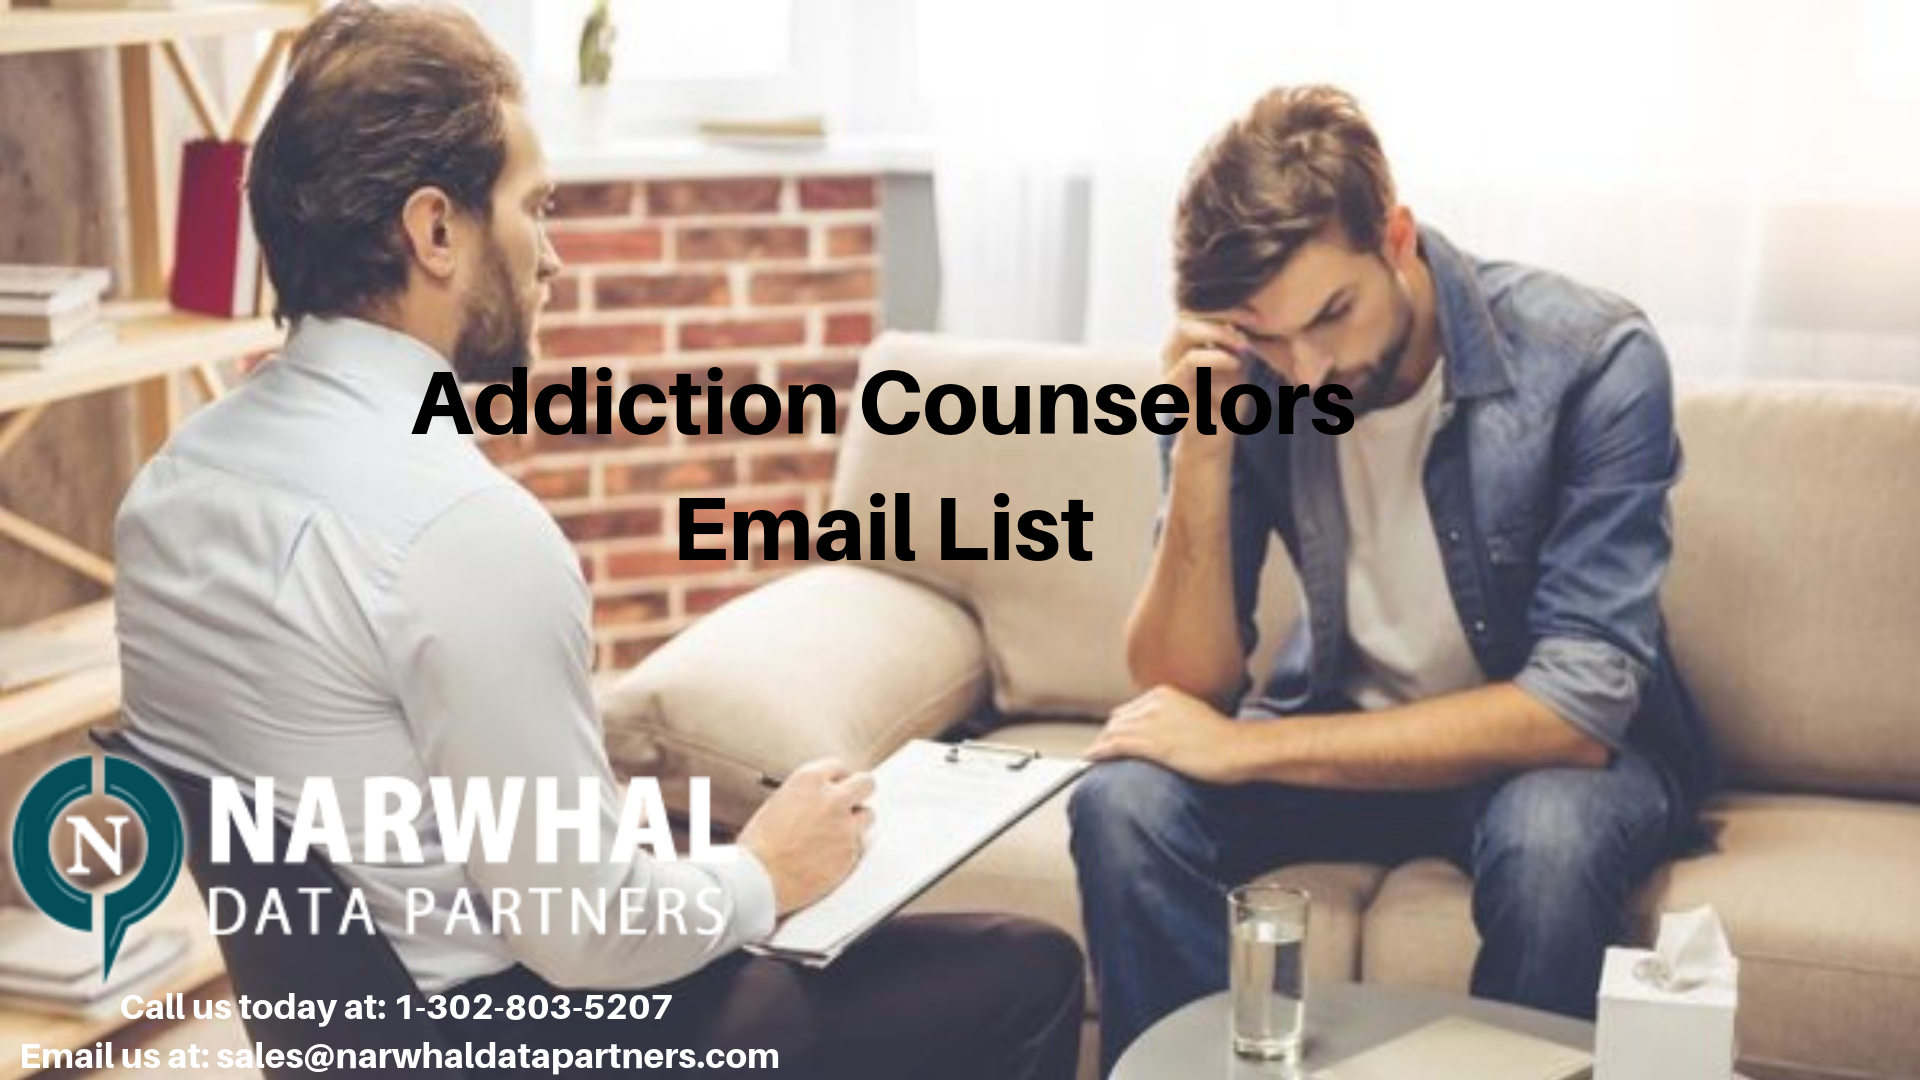 http://narwhaldatapartners.com/addiction-counselors-email-list.html